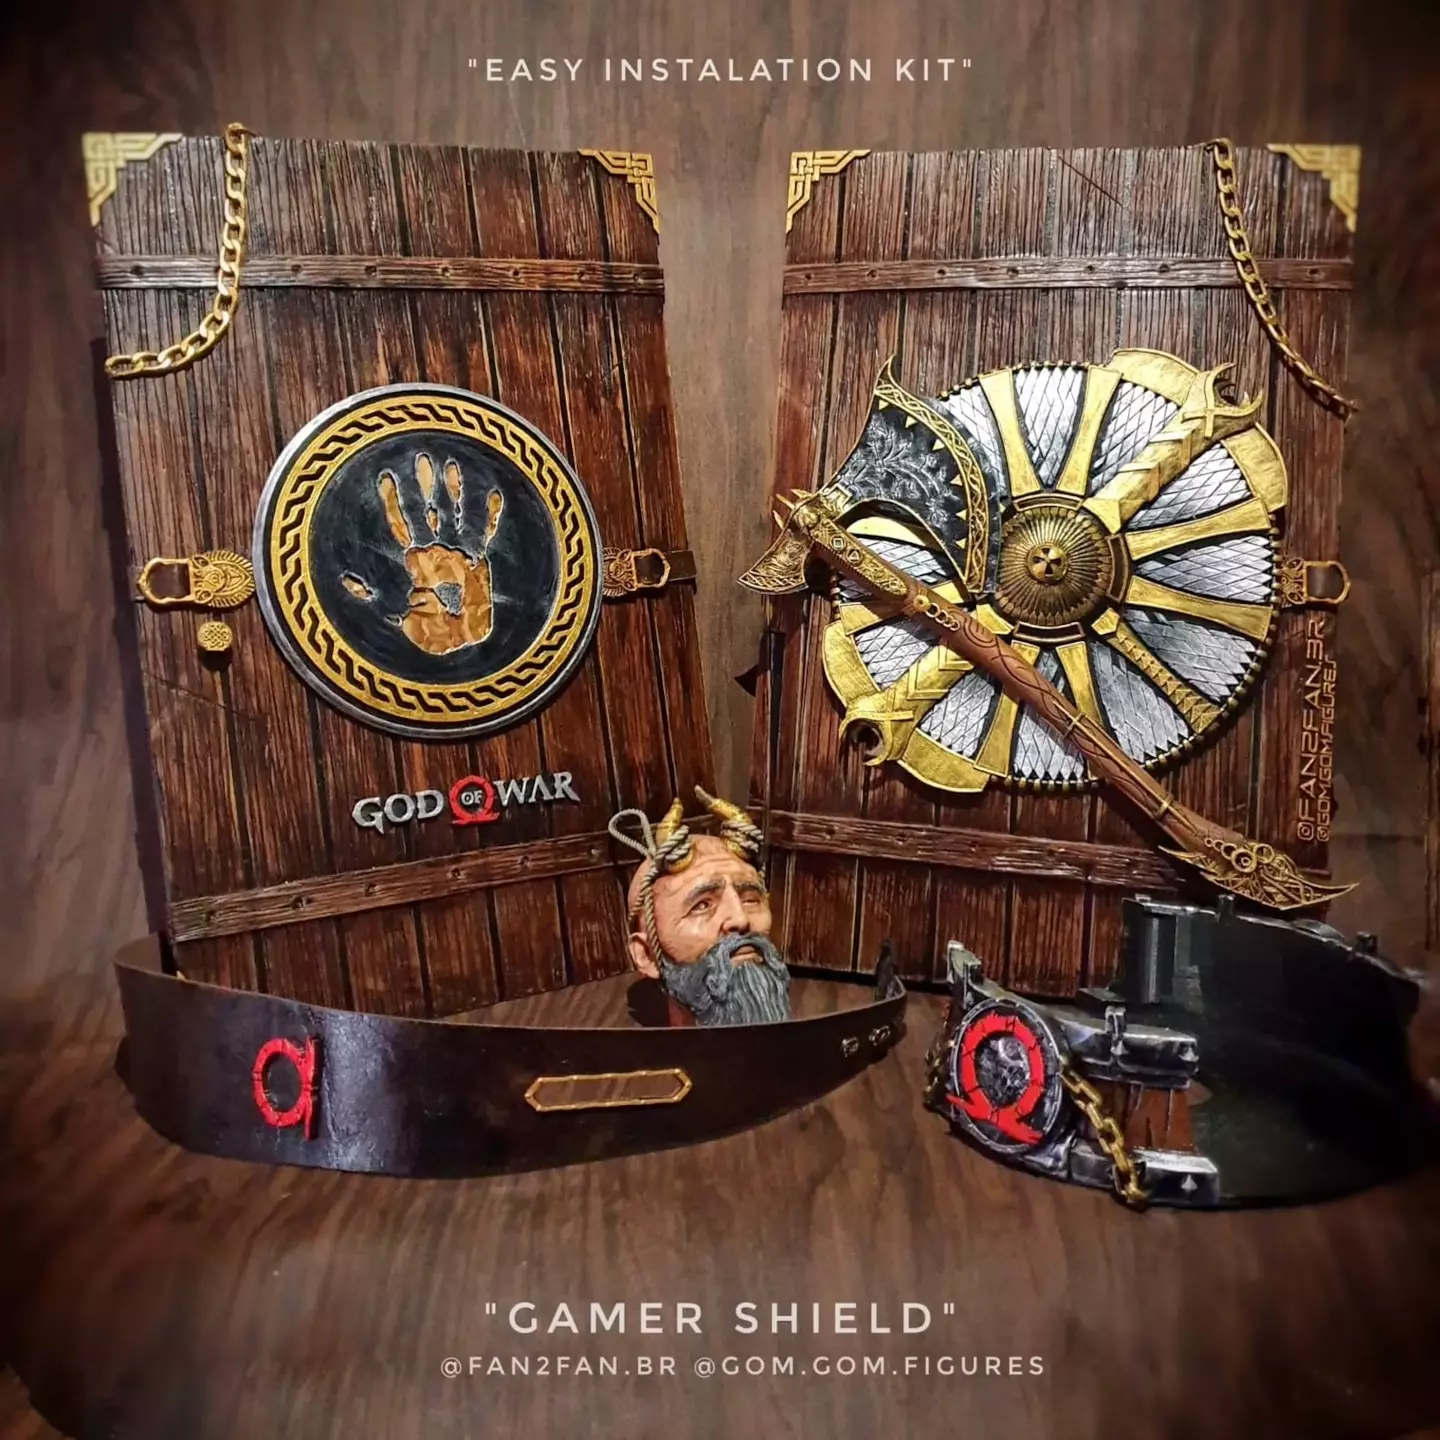 The God Of War "Gamer Shield" case /